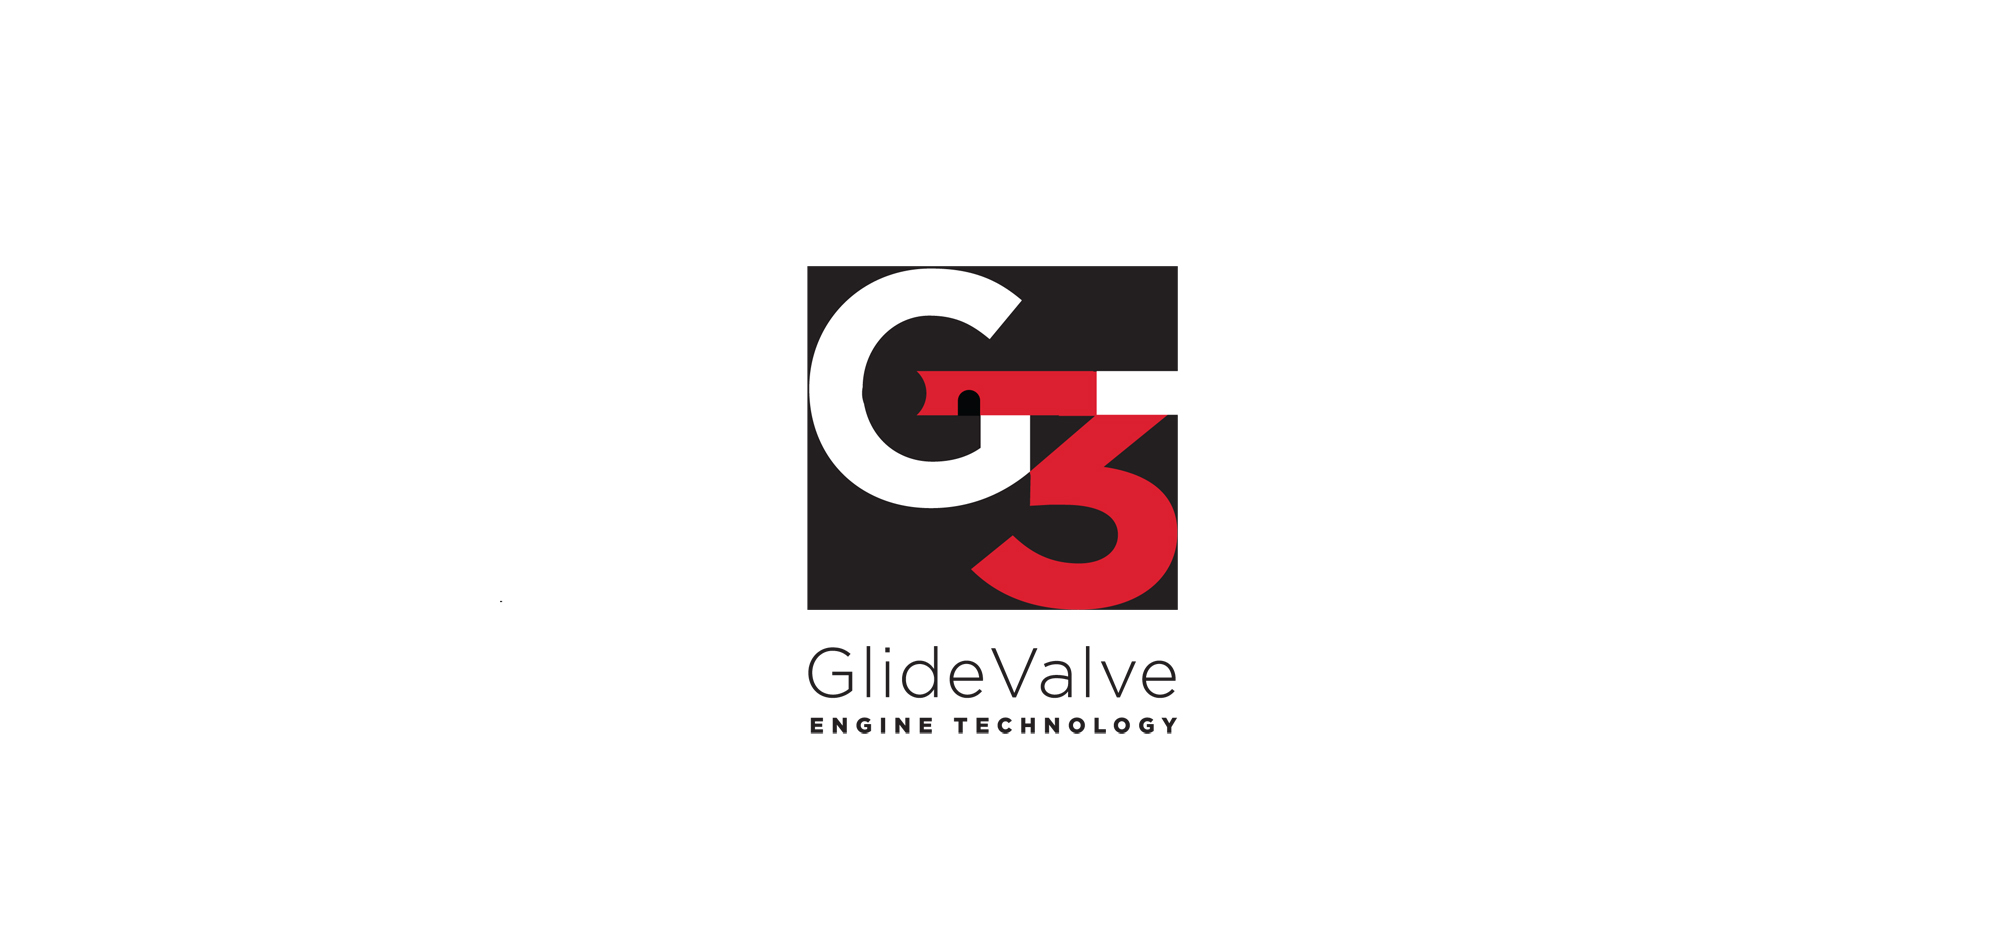 G4_logo3_v2b.jpg